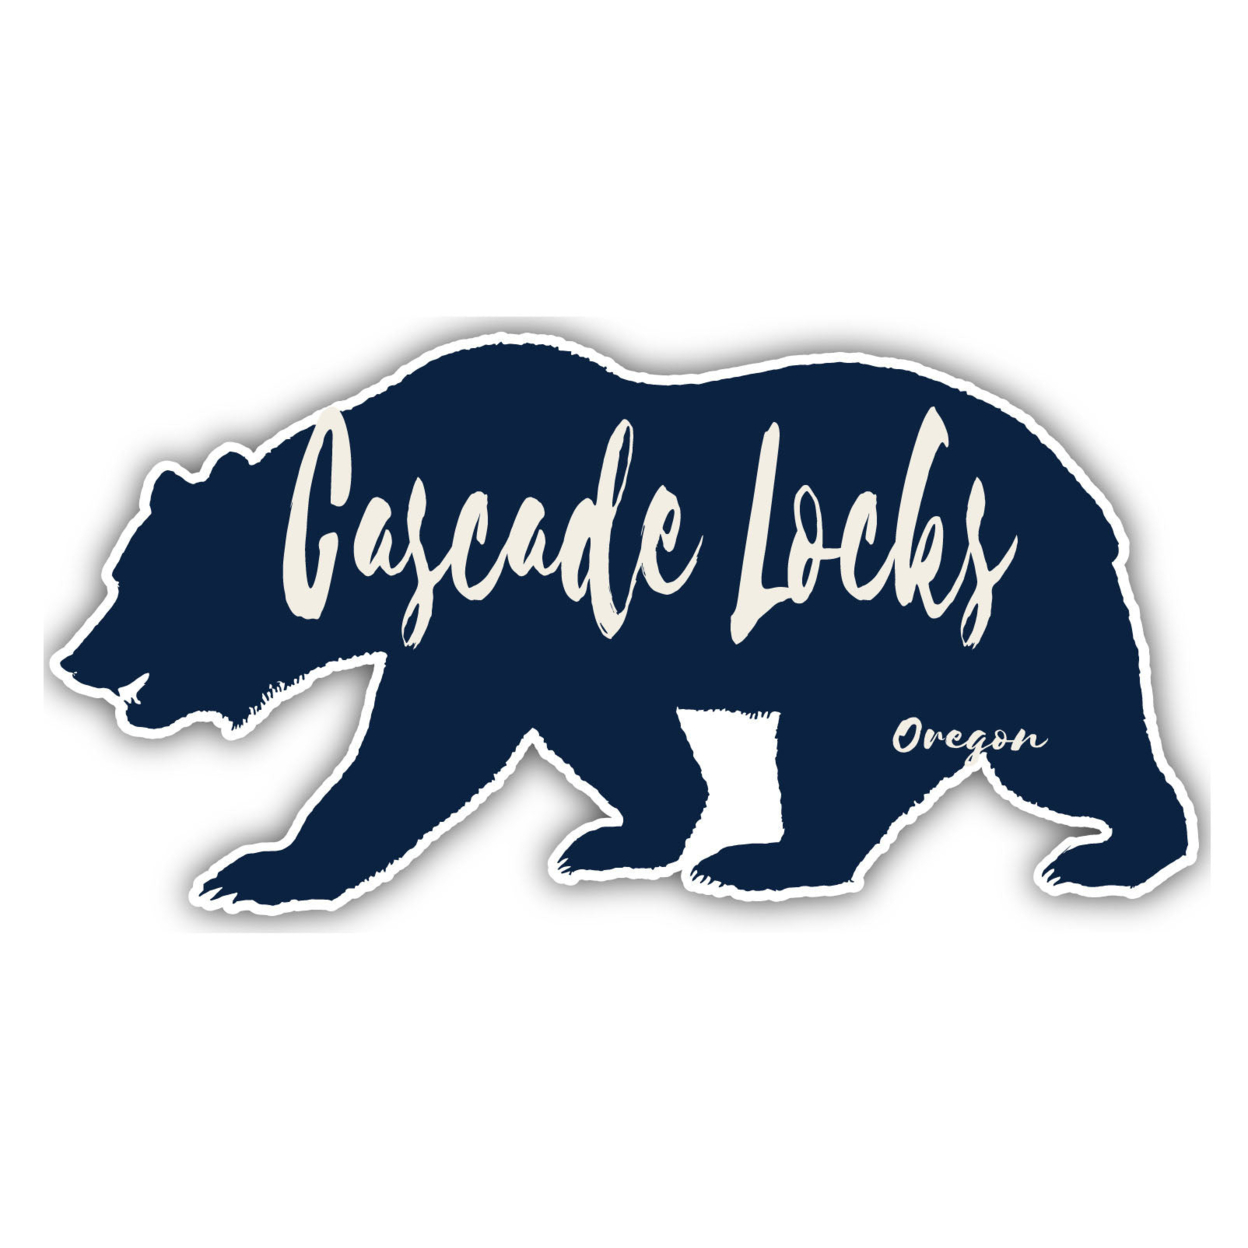 Cascade Locks Oregon Souvenir Decorative Stickers (Choose Theme And Size) - Single Unit, 10-Inch, Bear